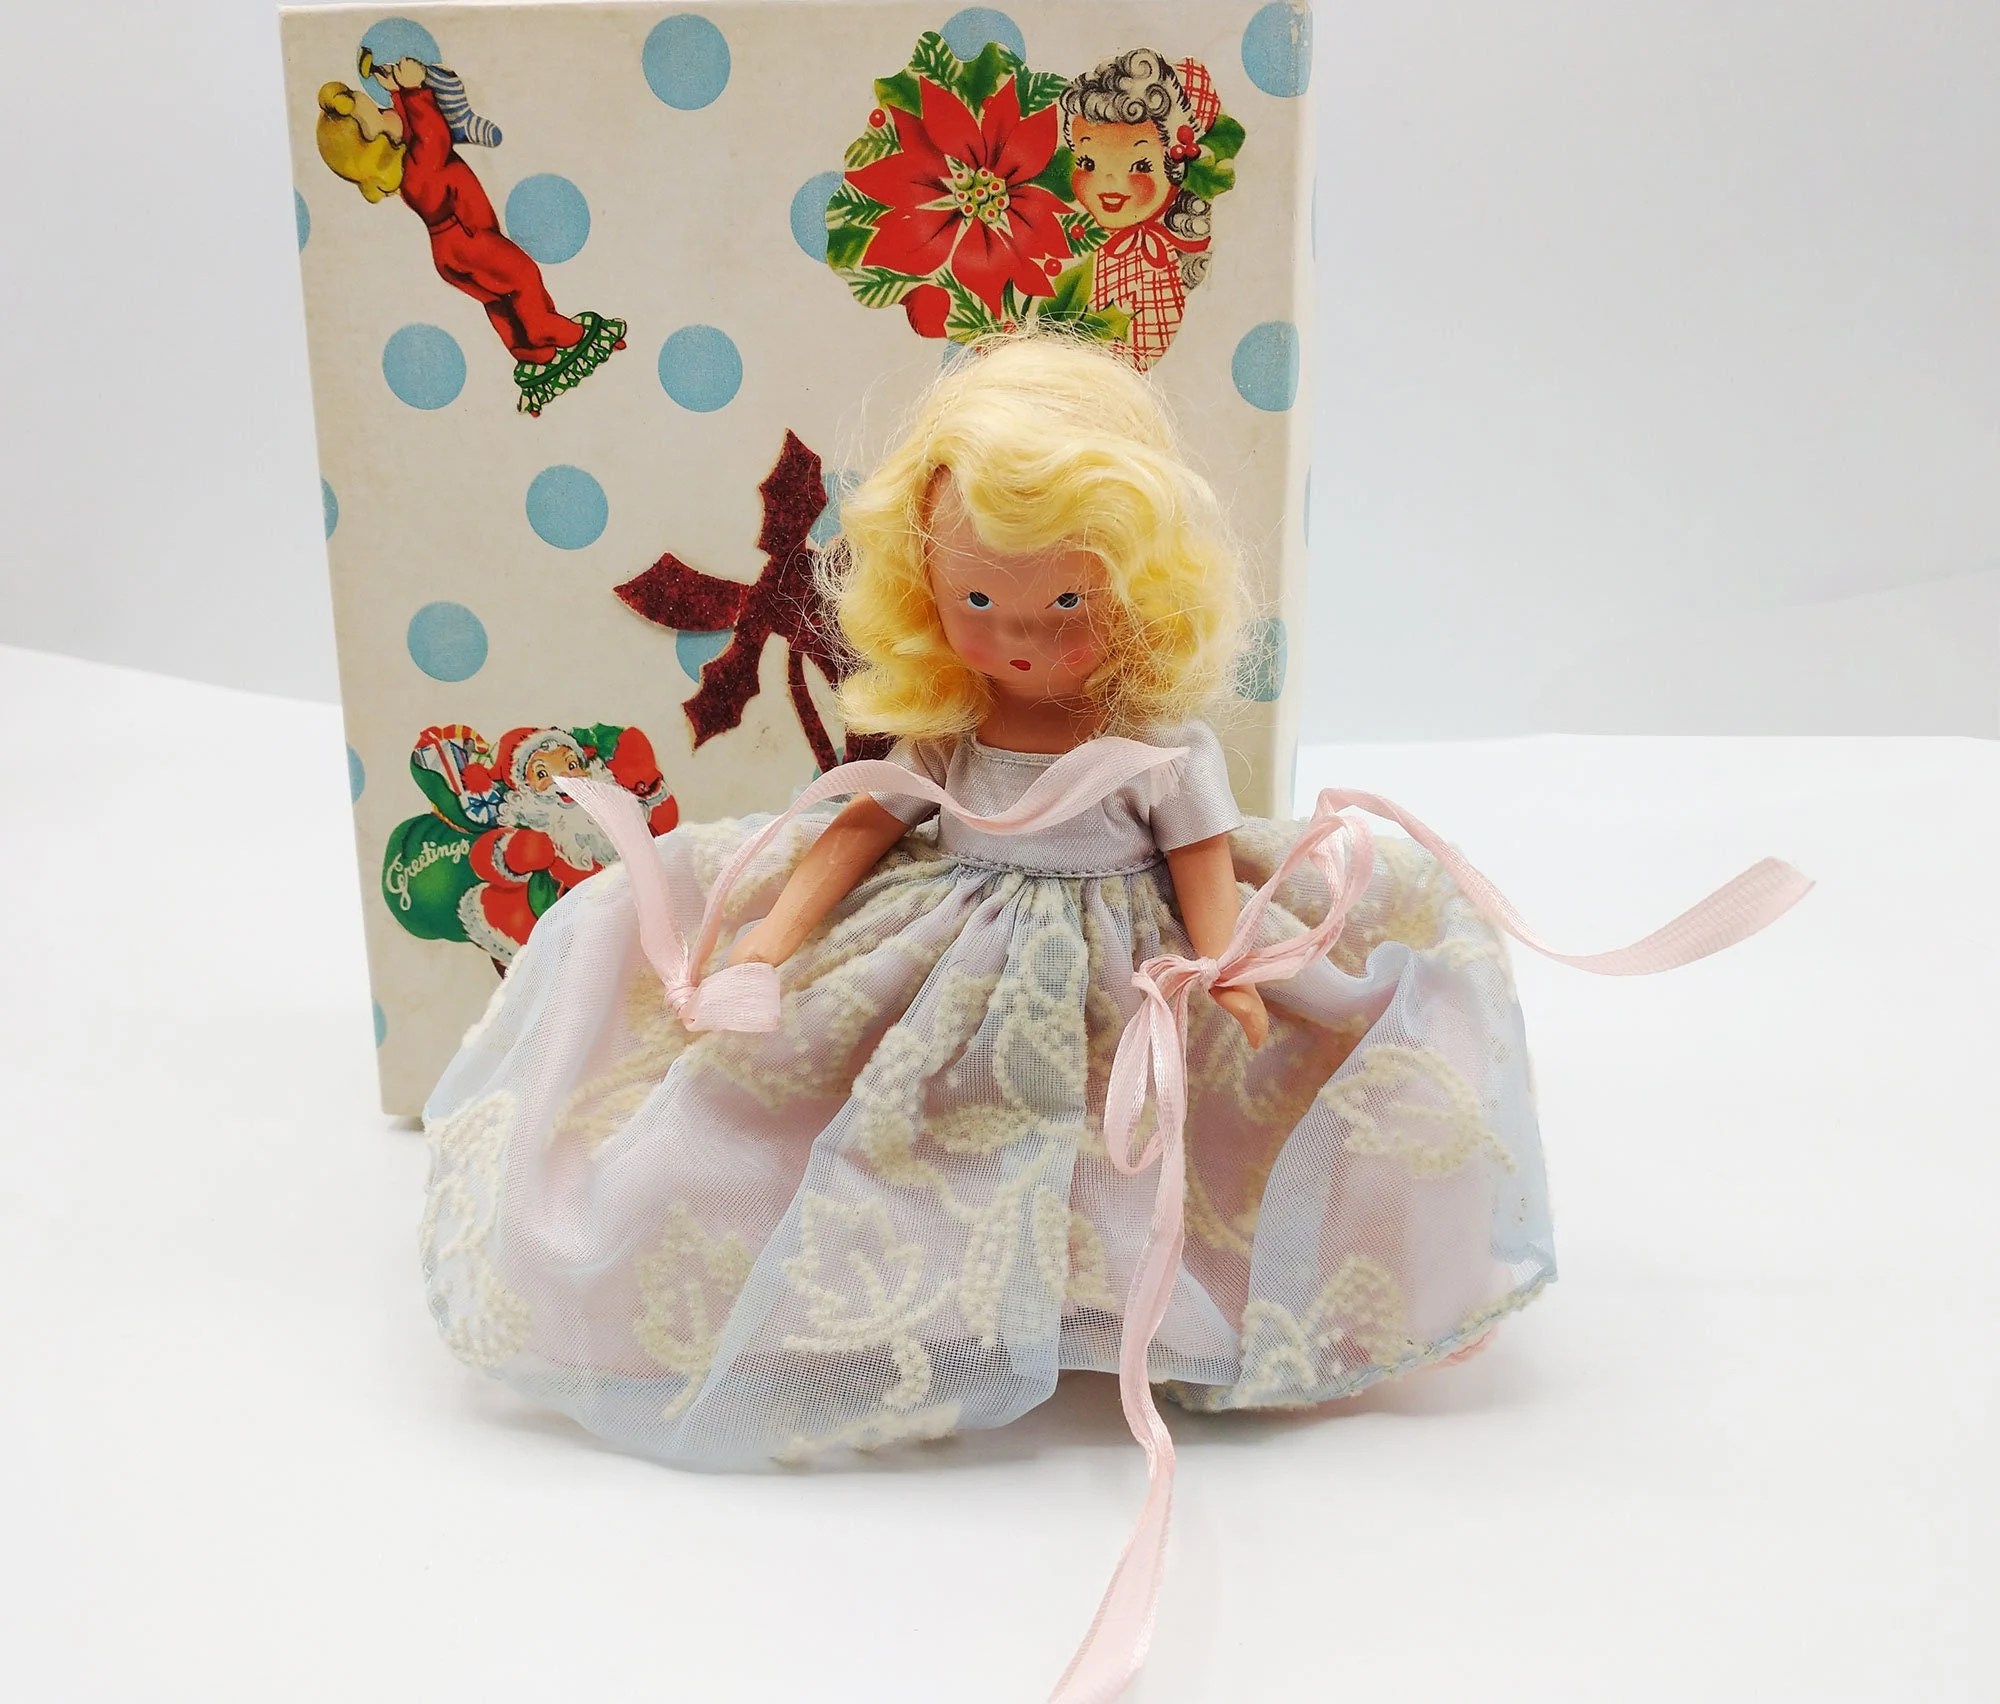 Nancy Ann Storybook Elsie Marley #31 Girl Doll - Storybook Series - Vintage 5.5” Bisque Frozen Legs with Original Box, Partial Tag 1936-1948